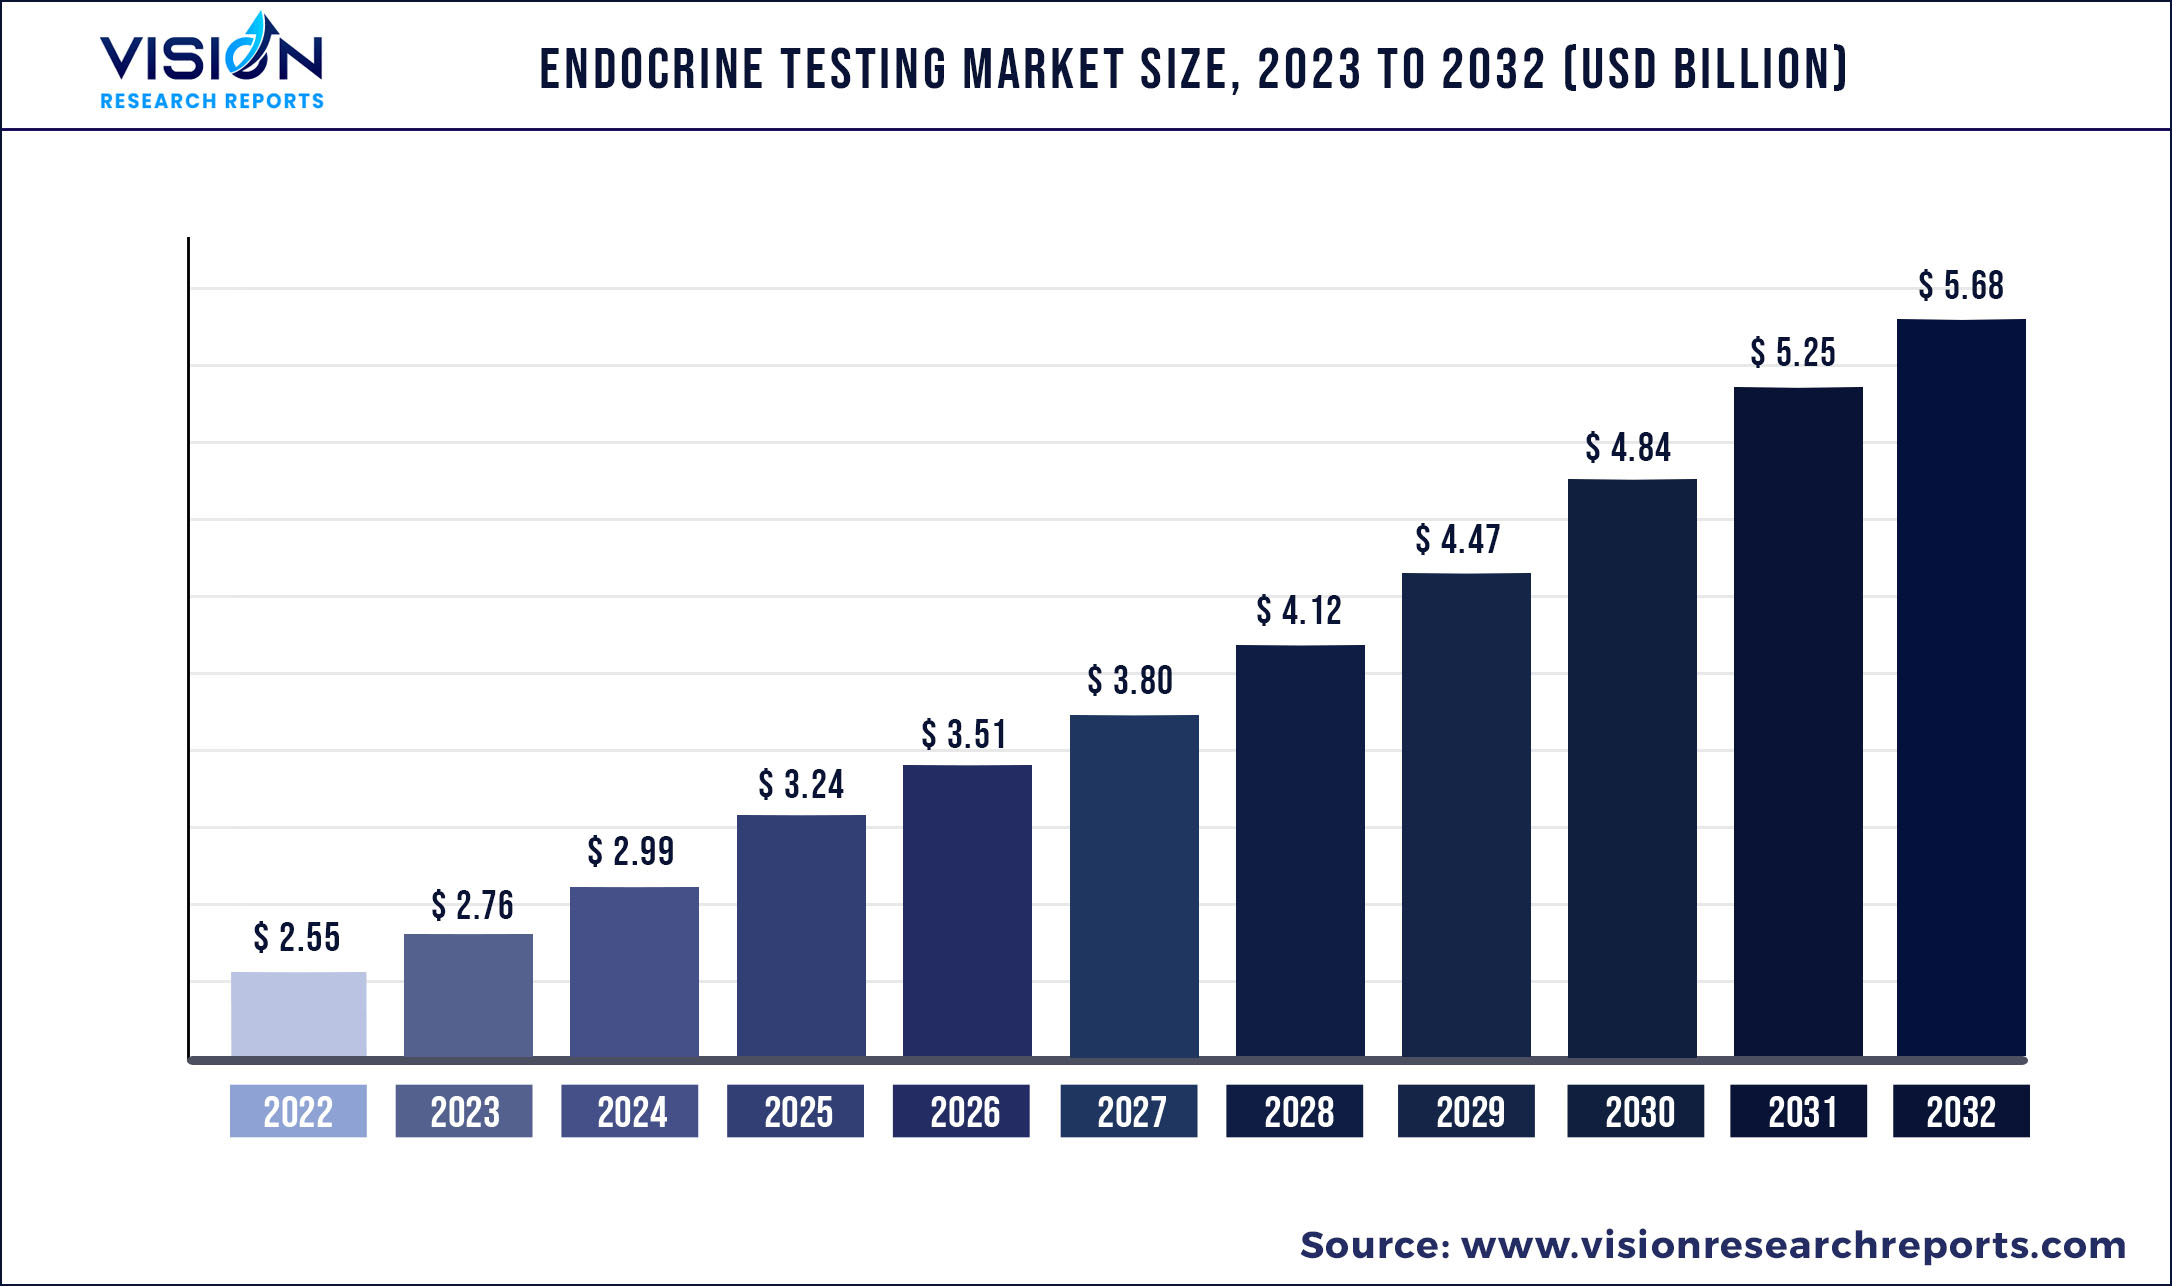 Endocrine Testing Market Size 2023 to 2032